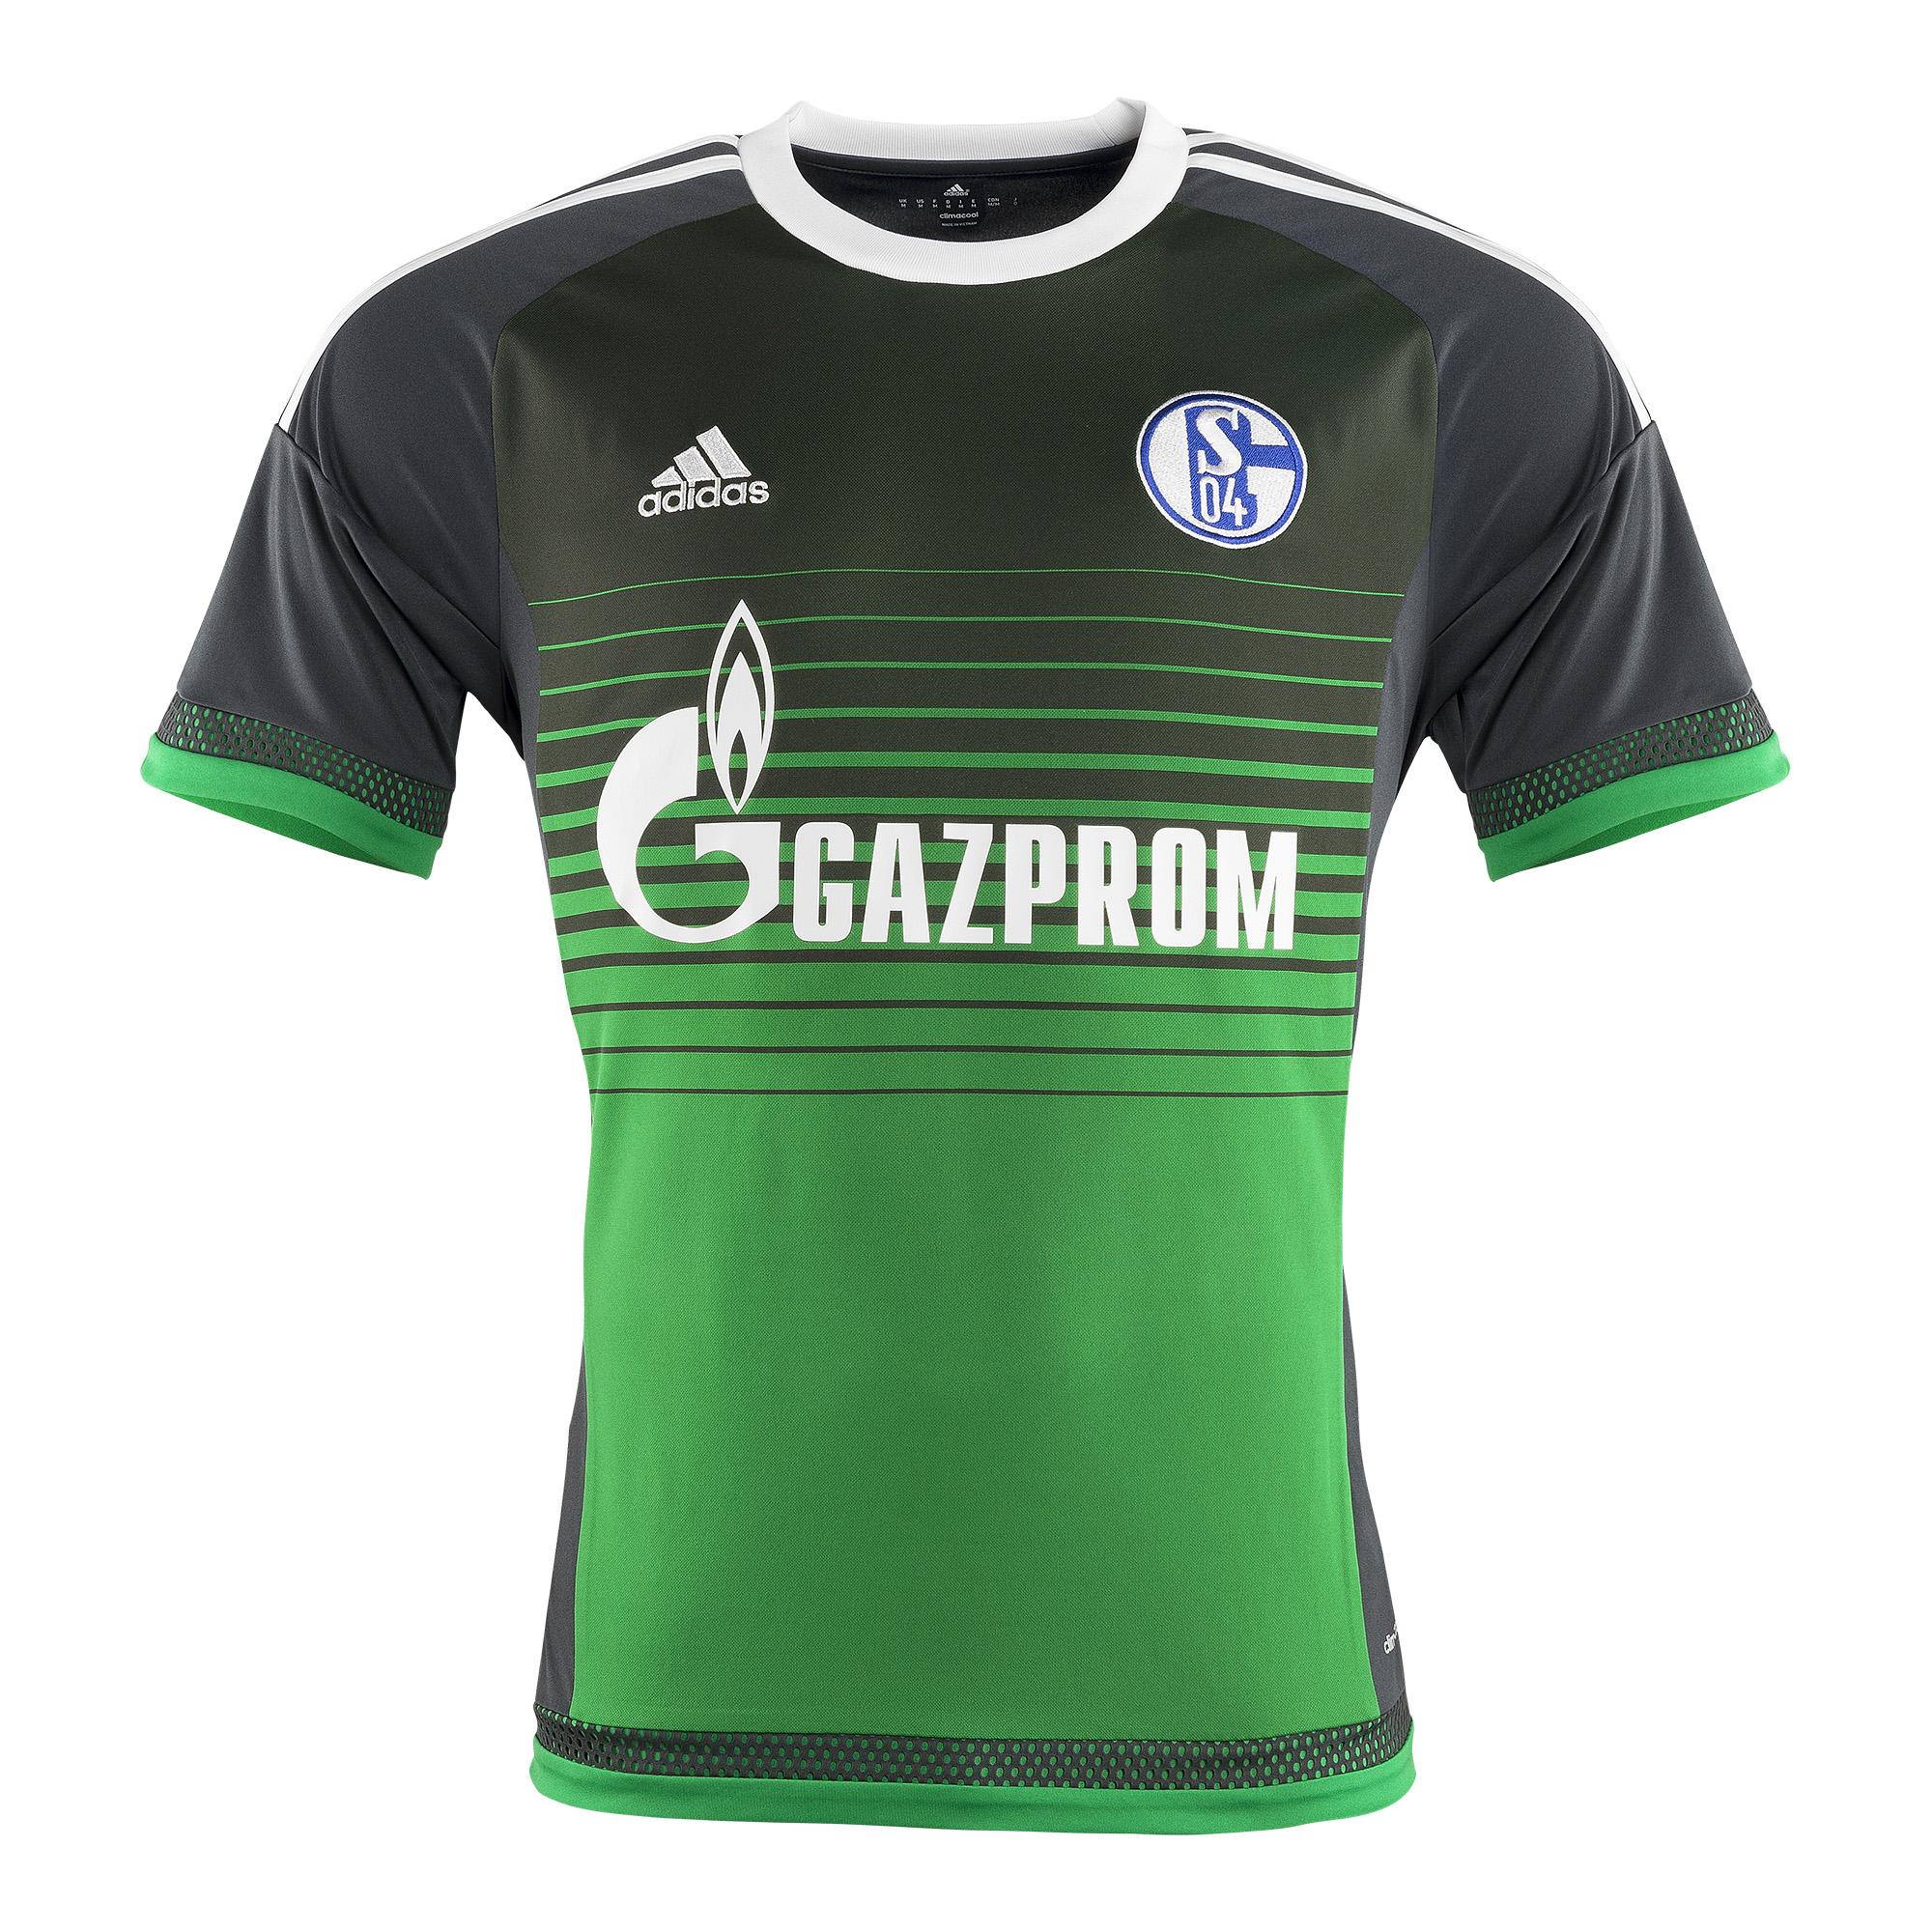 Veel Vrijwillig genoeg FC Schalke 04 on Twitter: "The new #Schalke alternate kit is here!  Pre-order yours now at the online fan shop: http://t.co/8NLNM3562M #s04  http://t.co/2V2rVA8ANu" / X